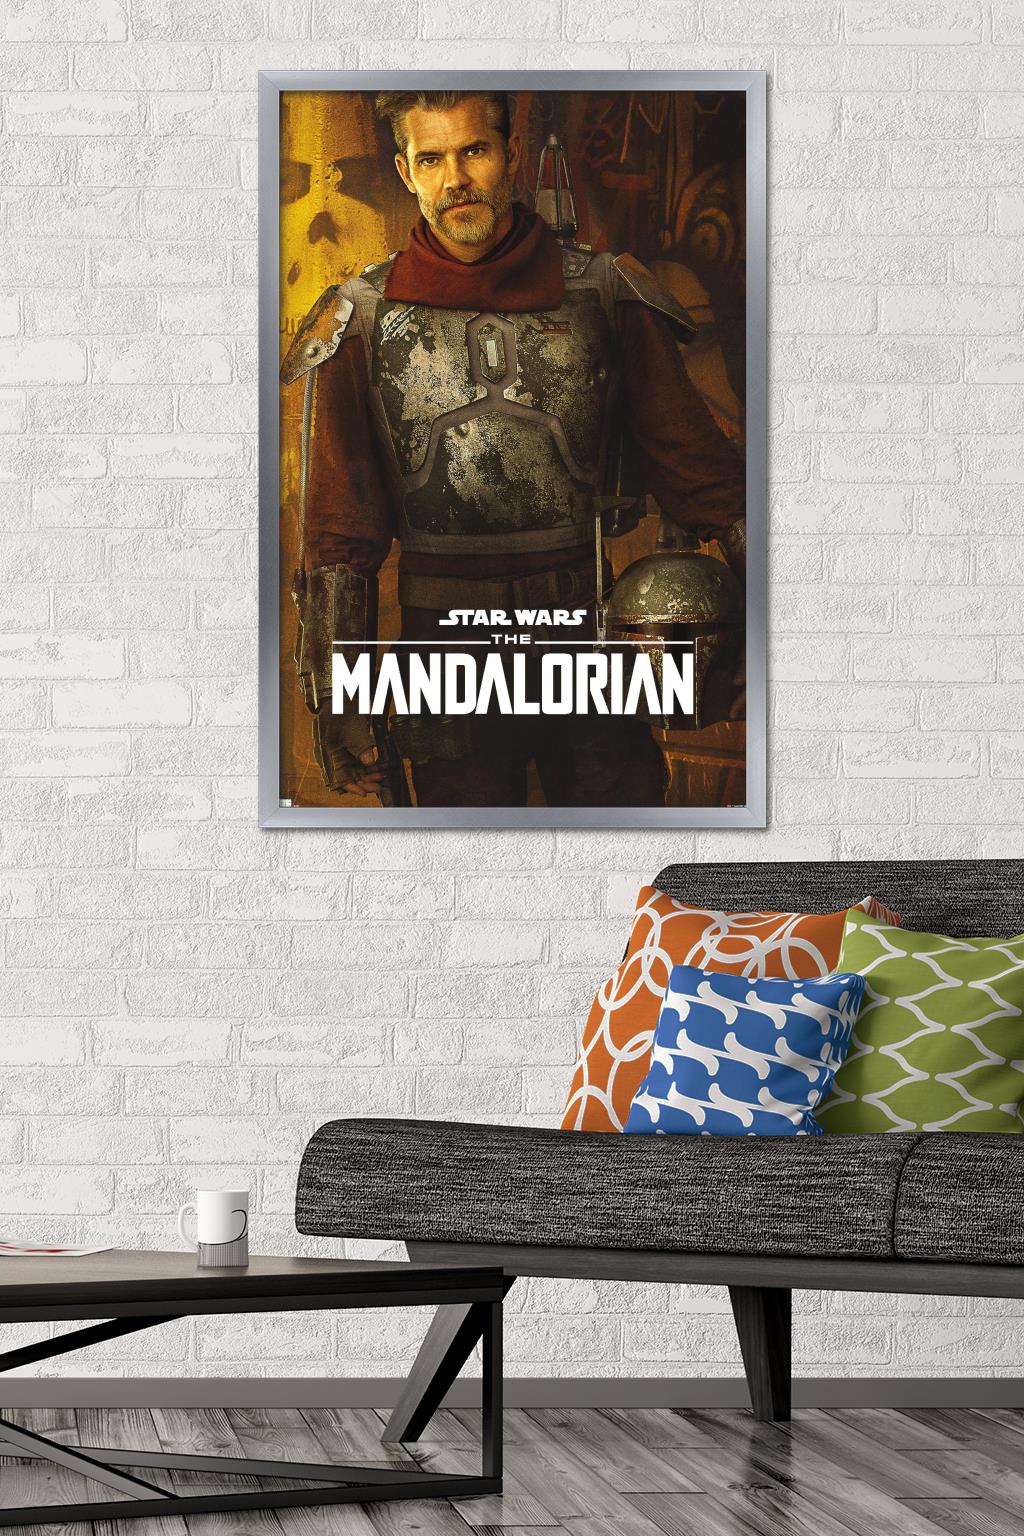 Star Wars: The Mandalorian Season 2 - Cobb Vanth Wall Poster, 22.375" x 34", Framed - image 2 of 5